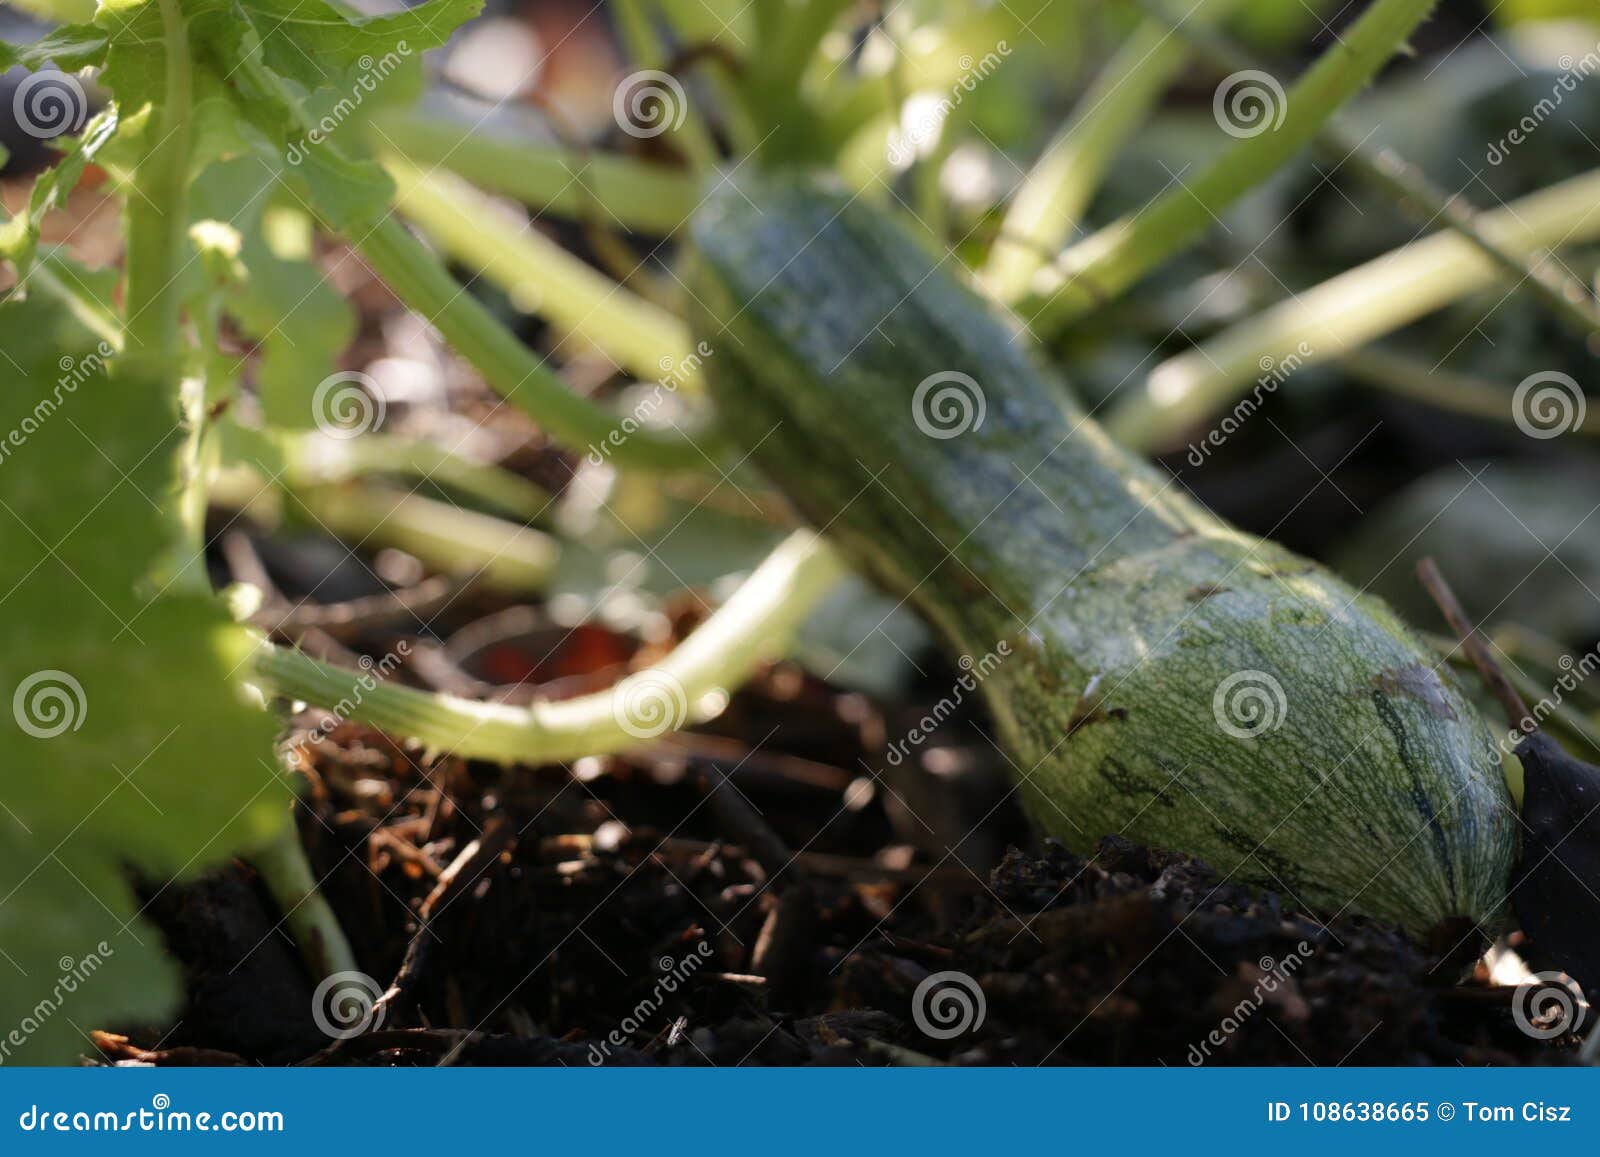 zucchini on the farm